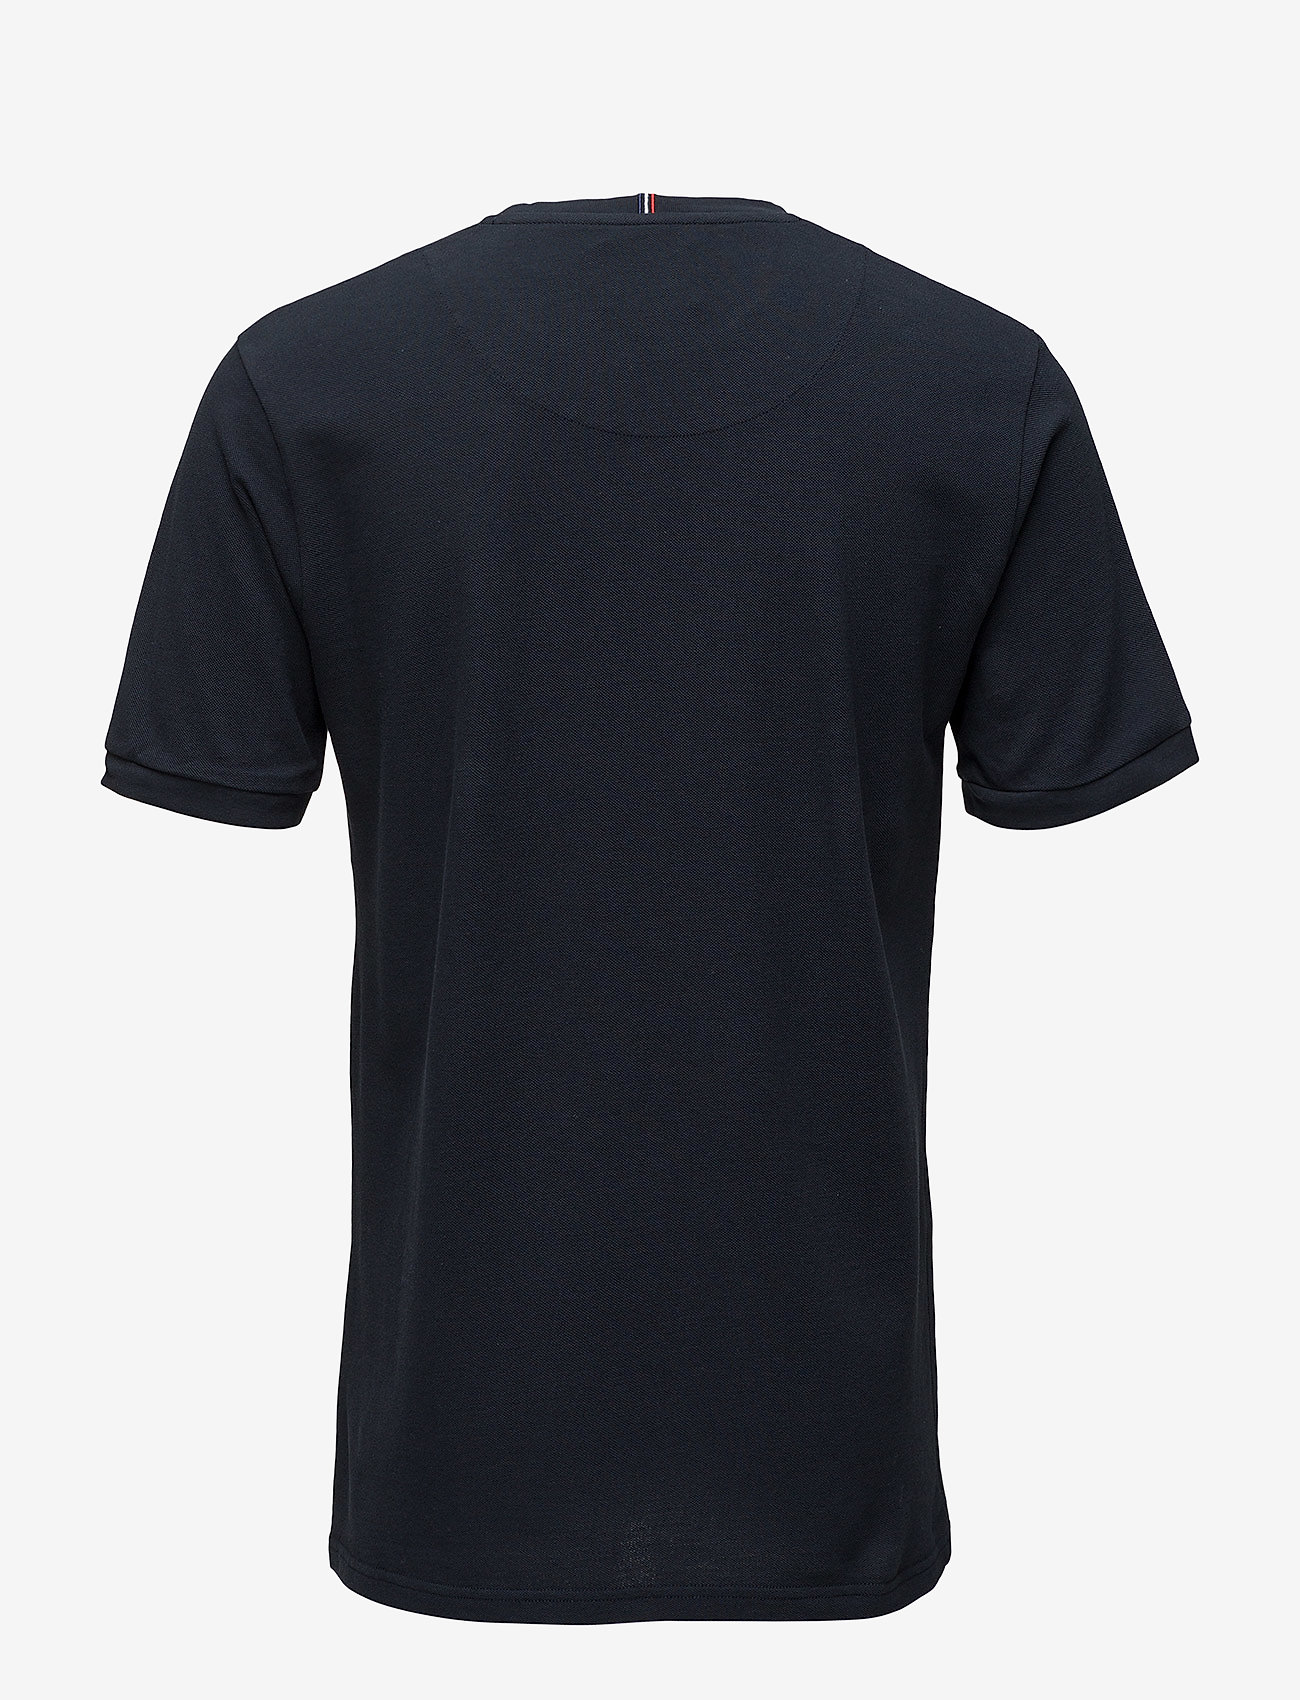 Les Deux Piqué T-shirt (Dark Navy) - 399 kr | Boozt.com